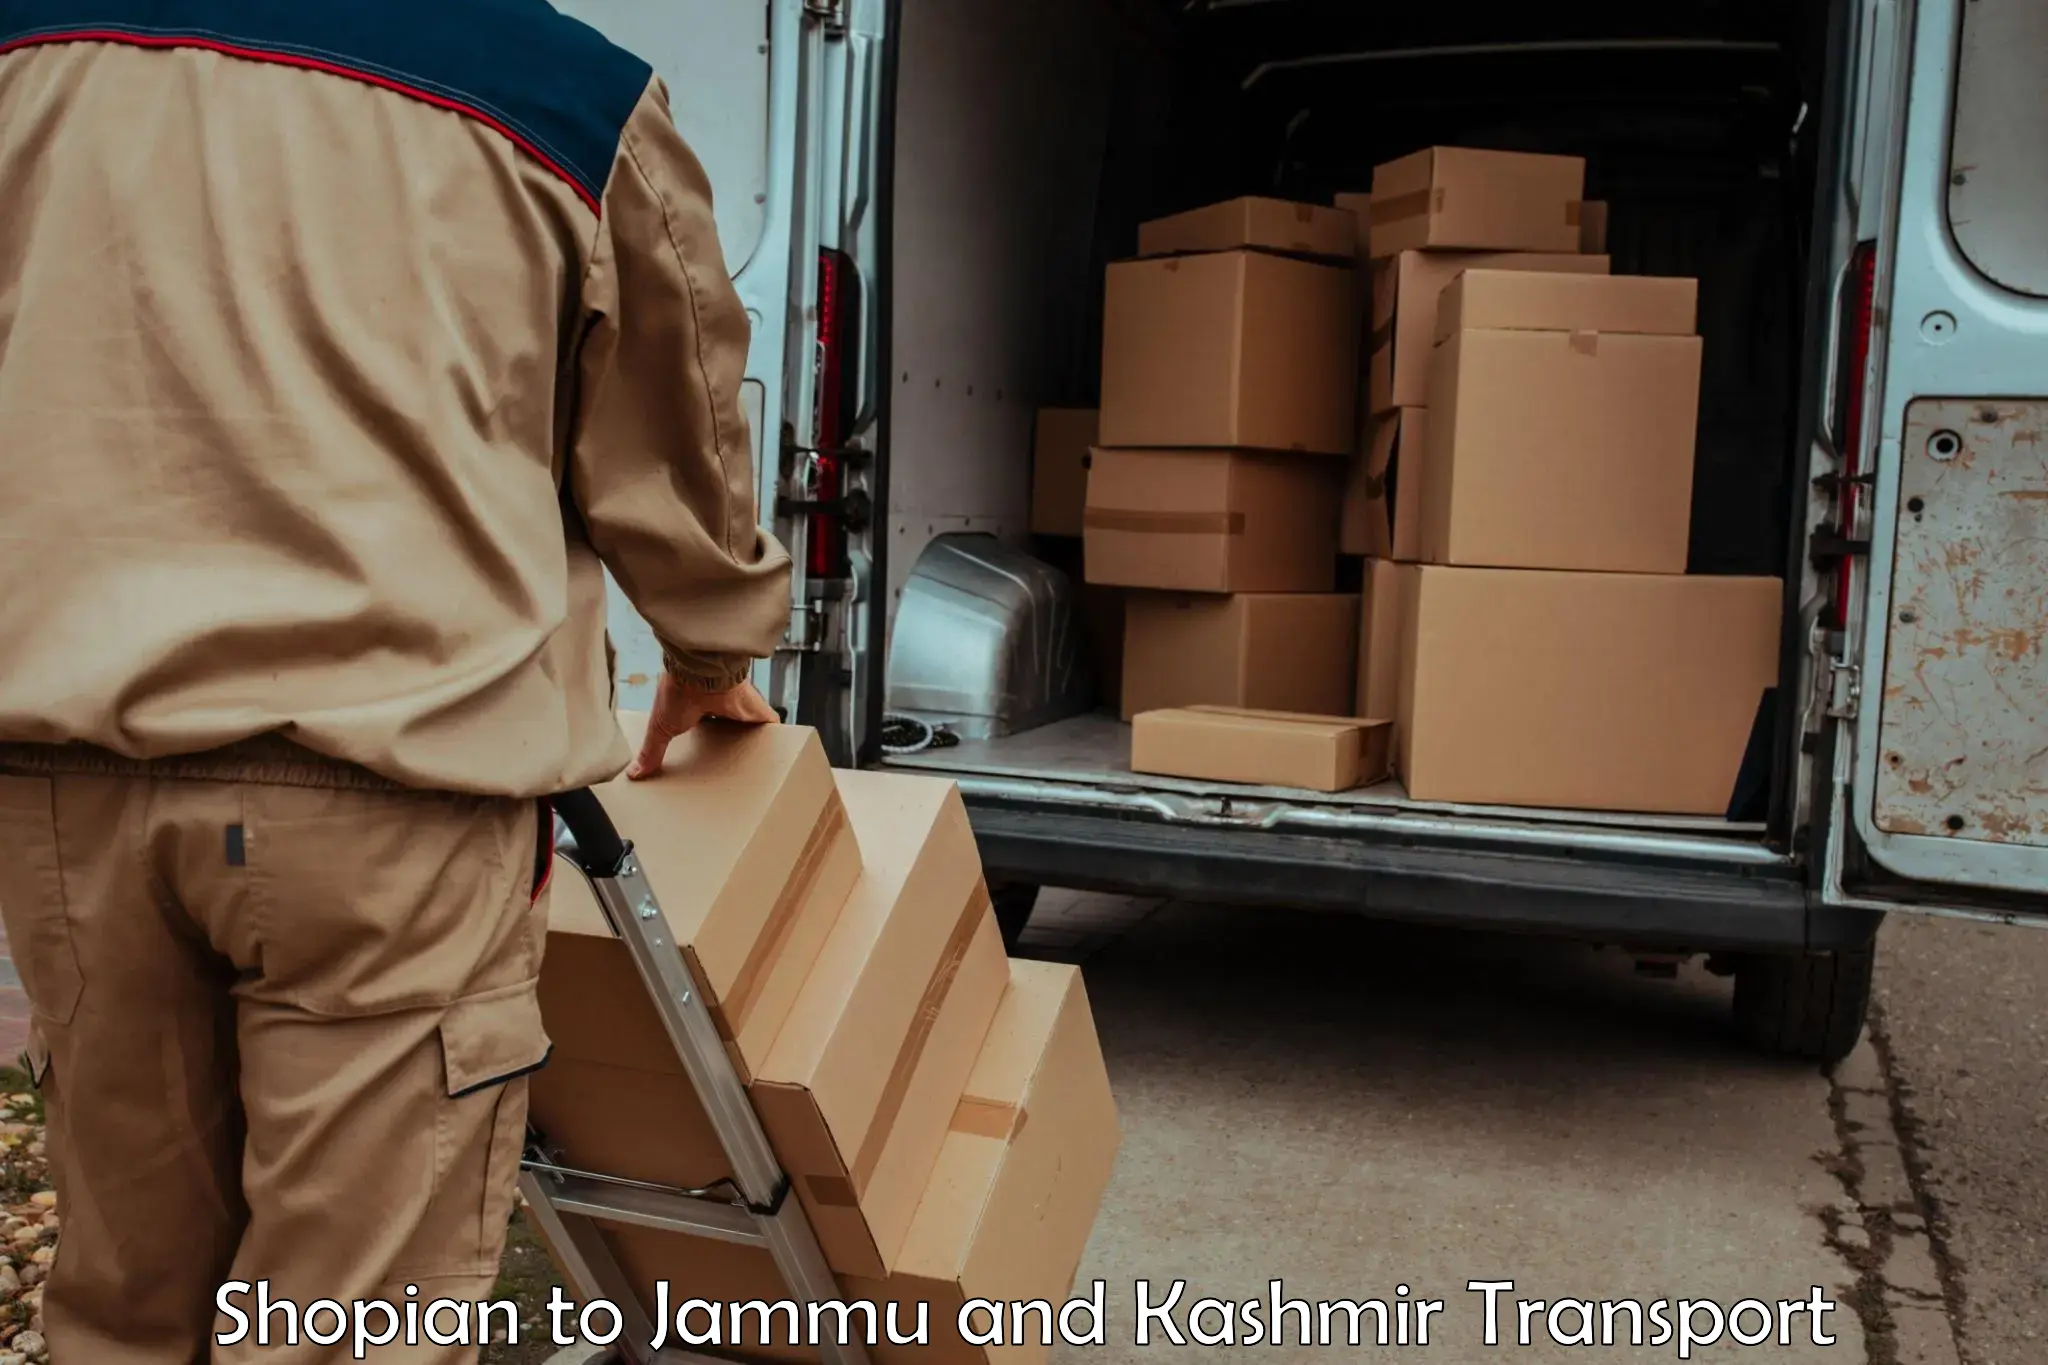 Truck transport companies in India Shopian to Srinagar Kashmir